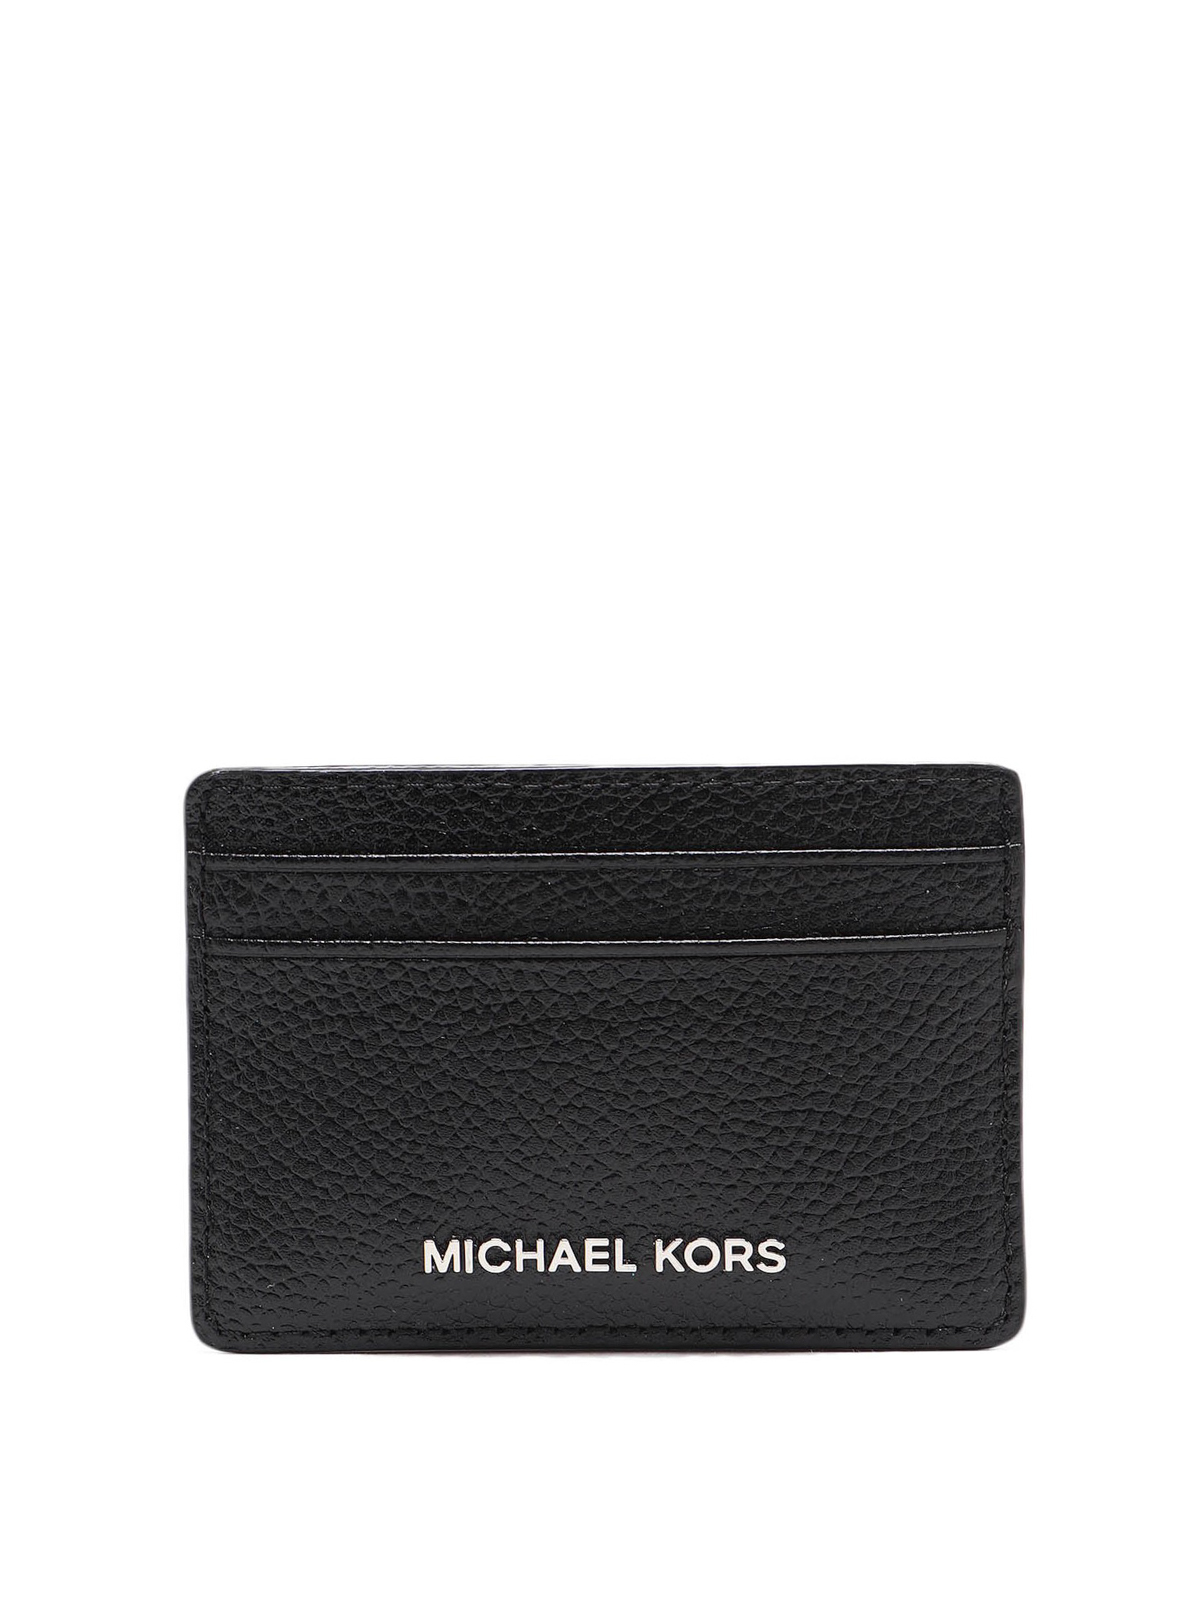 michael kors leather card holder